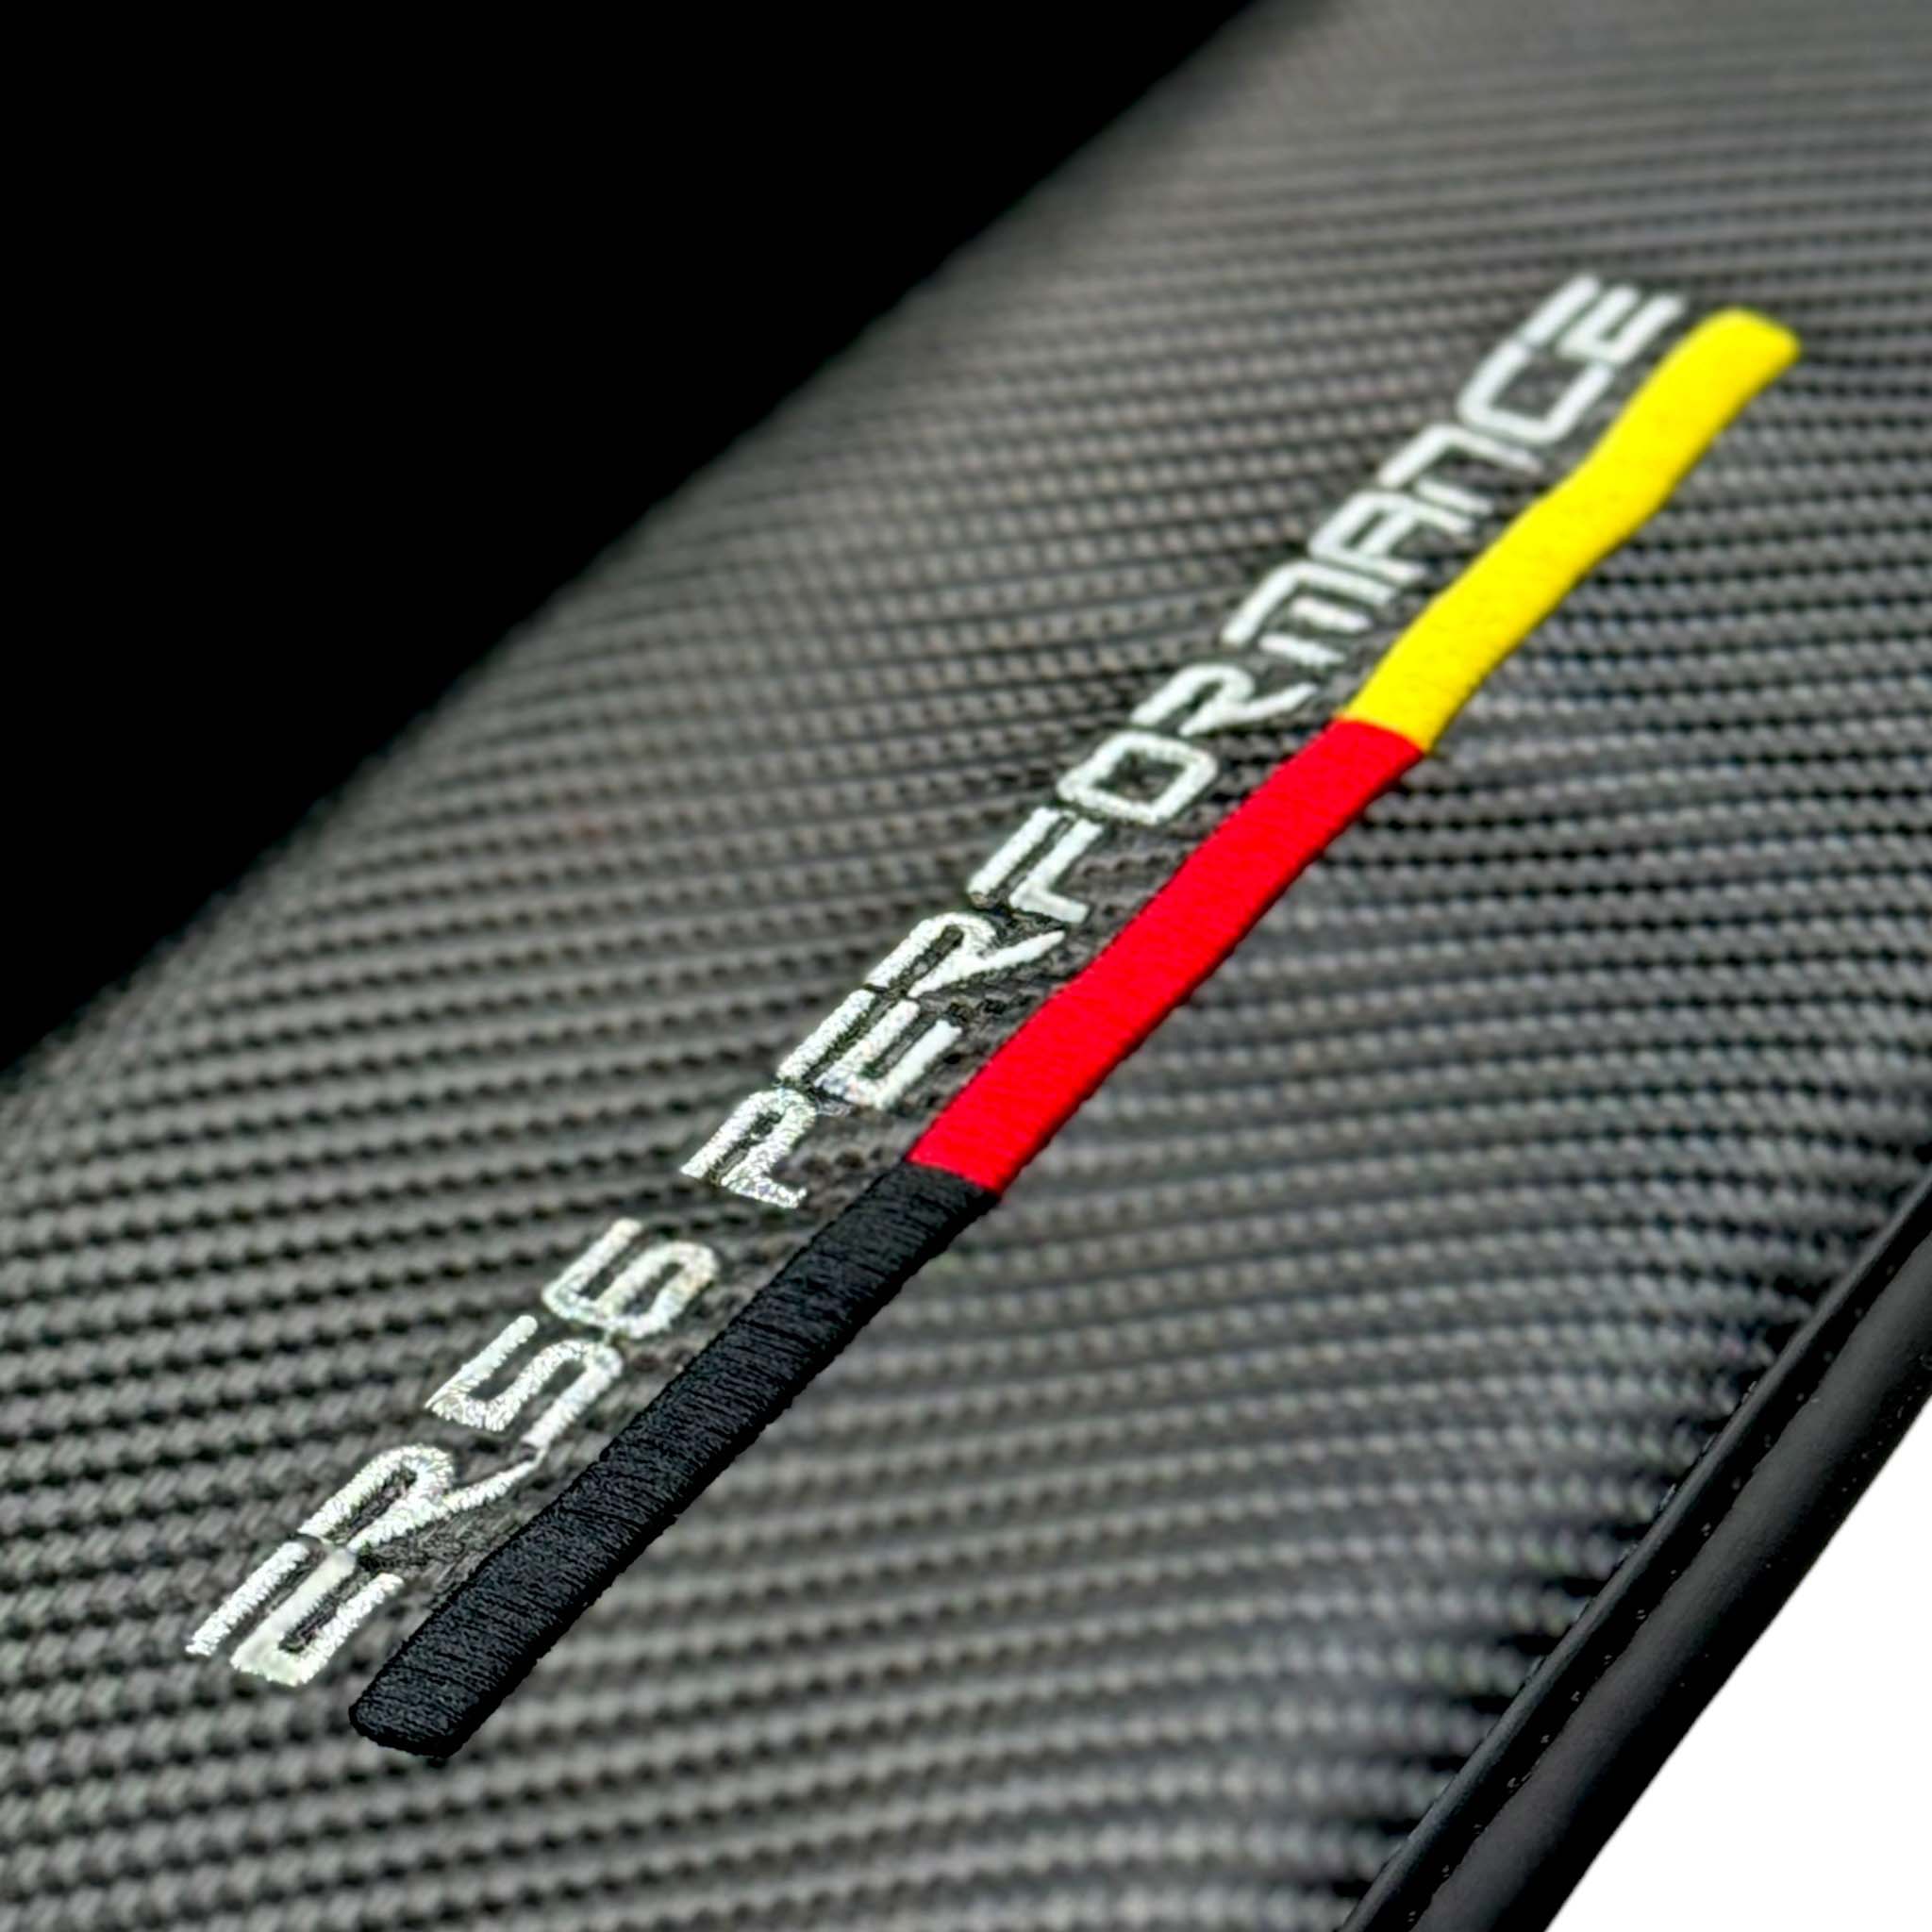 Black Floor Floor Mats For BMW X7 Series G07 | ER56 Performance | Carbon Edition